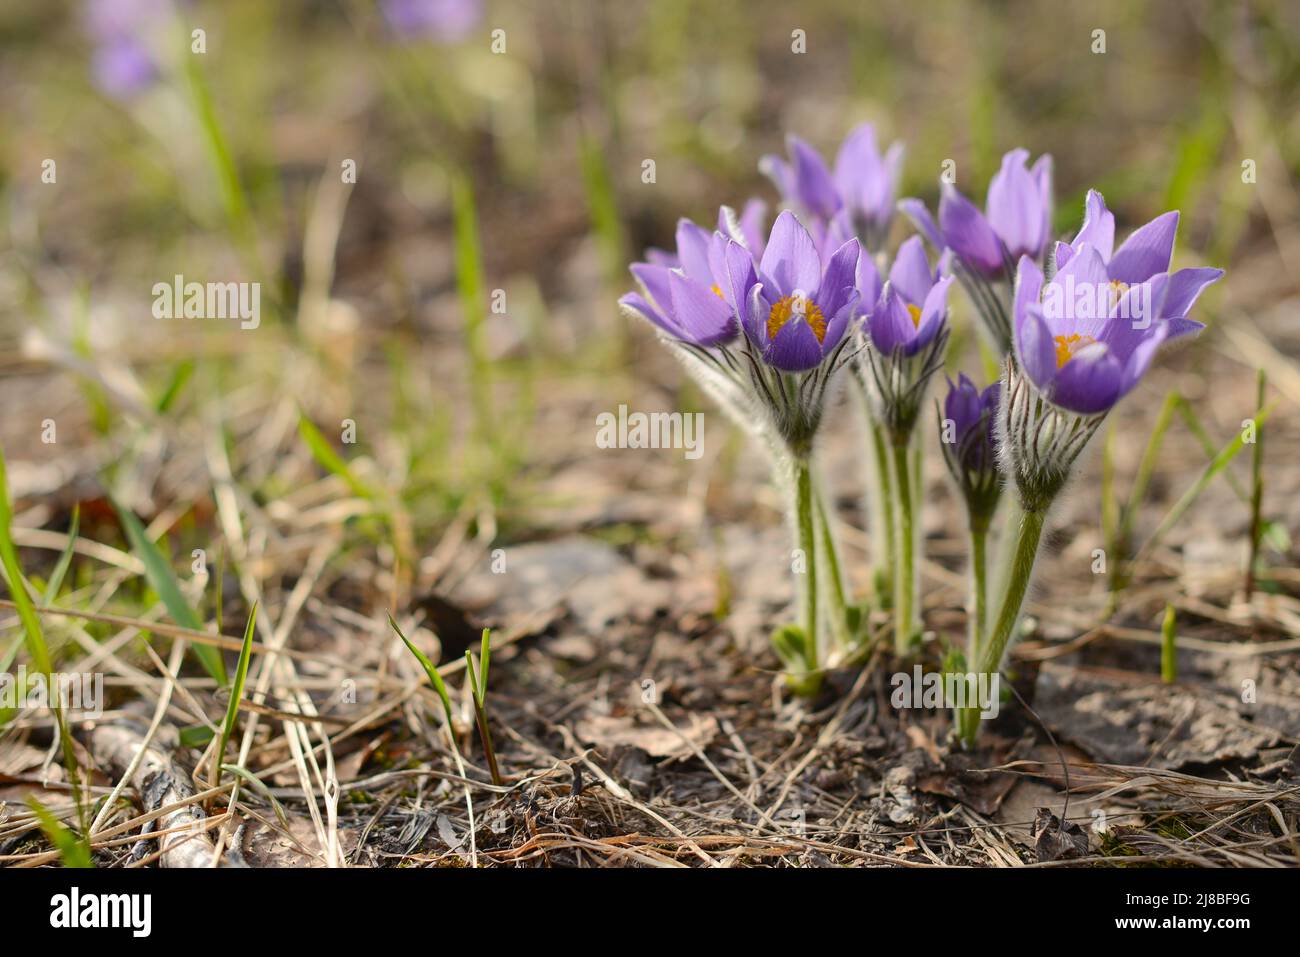 Sleep grass flowers. Snowdrops. Dream grass Pulsatilla patens. Gentle spring violet field flowers in forest fields Stock Photo